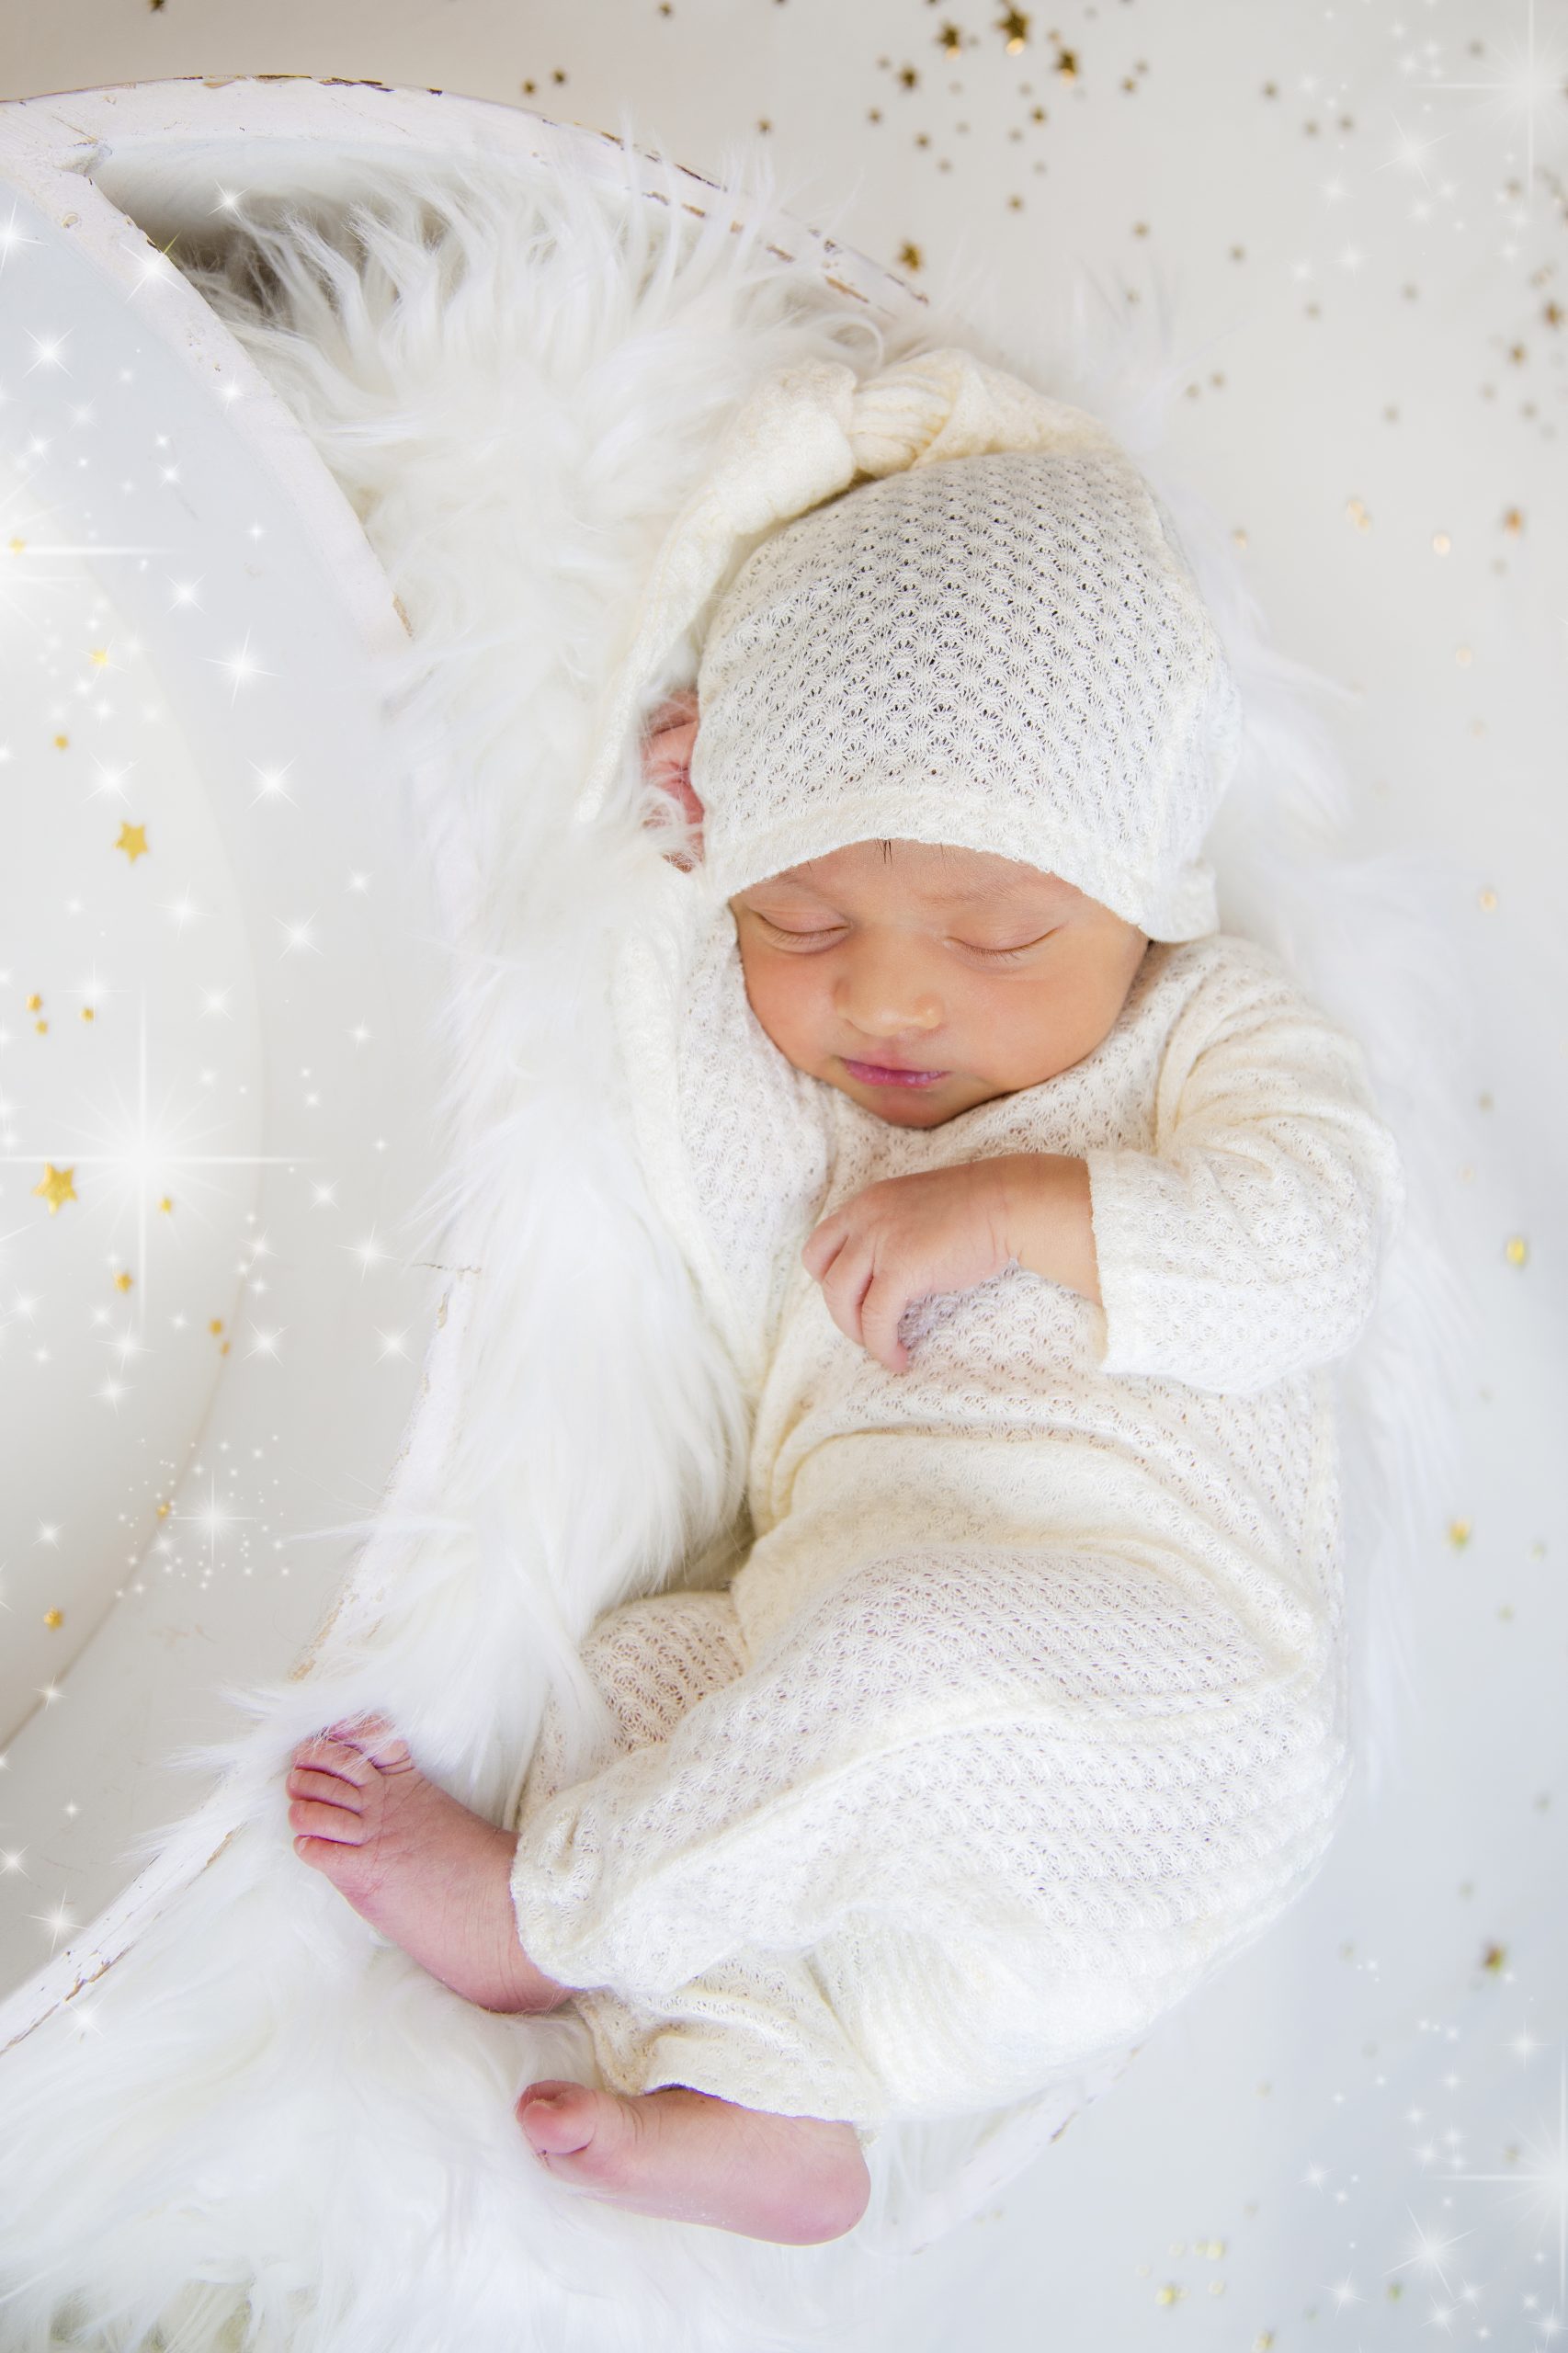 Newborn Photoshoot Props Bundle – Donna/Yuri (Mulch) - All Newborn Props